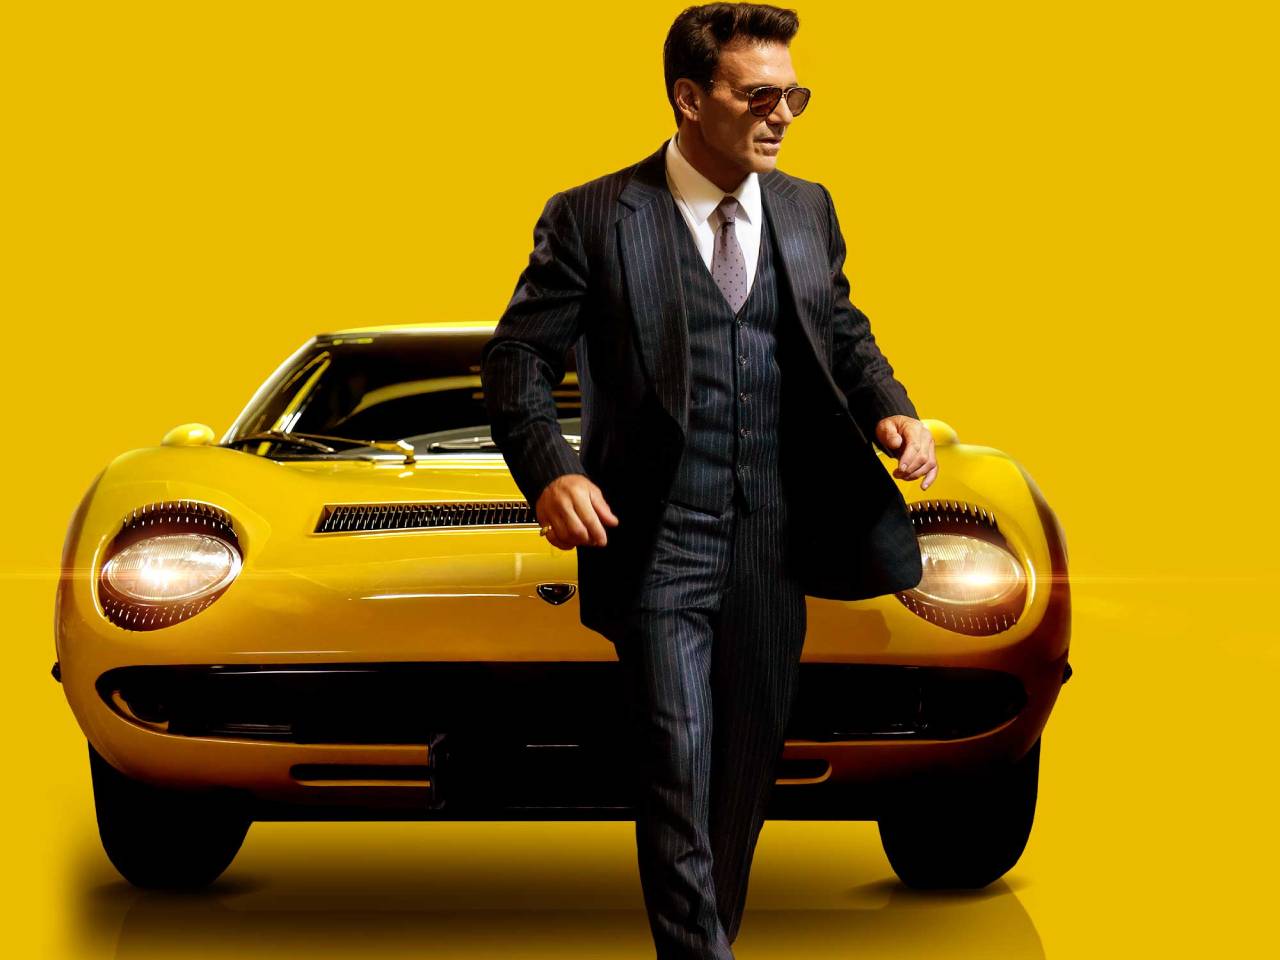 Cartaz do filme "Lamborghini" , que conta a histria do fundador da marca italiana rival da Ferrari